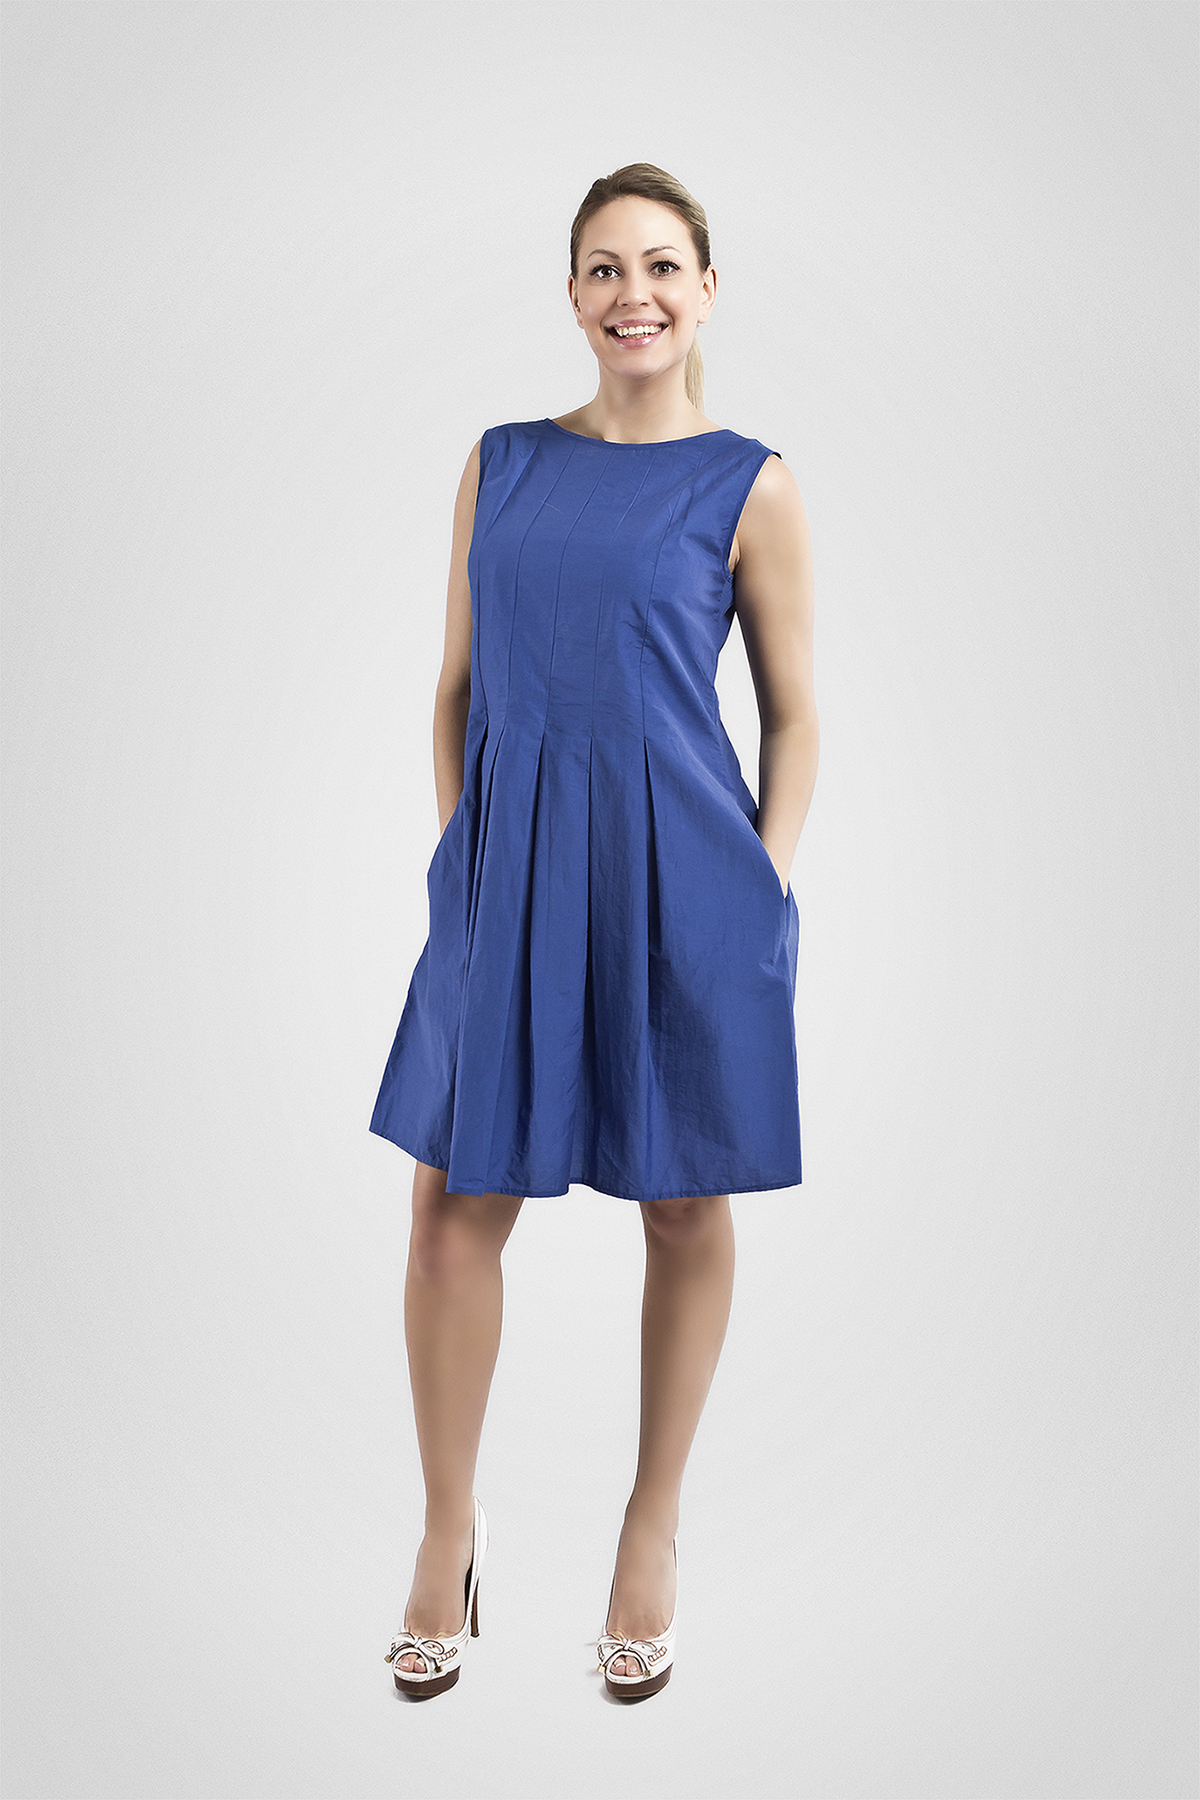 dress blue with folds - Valentina Design